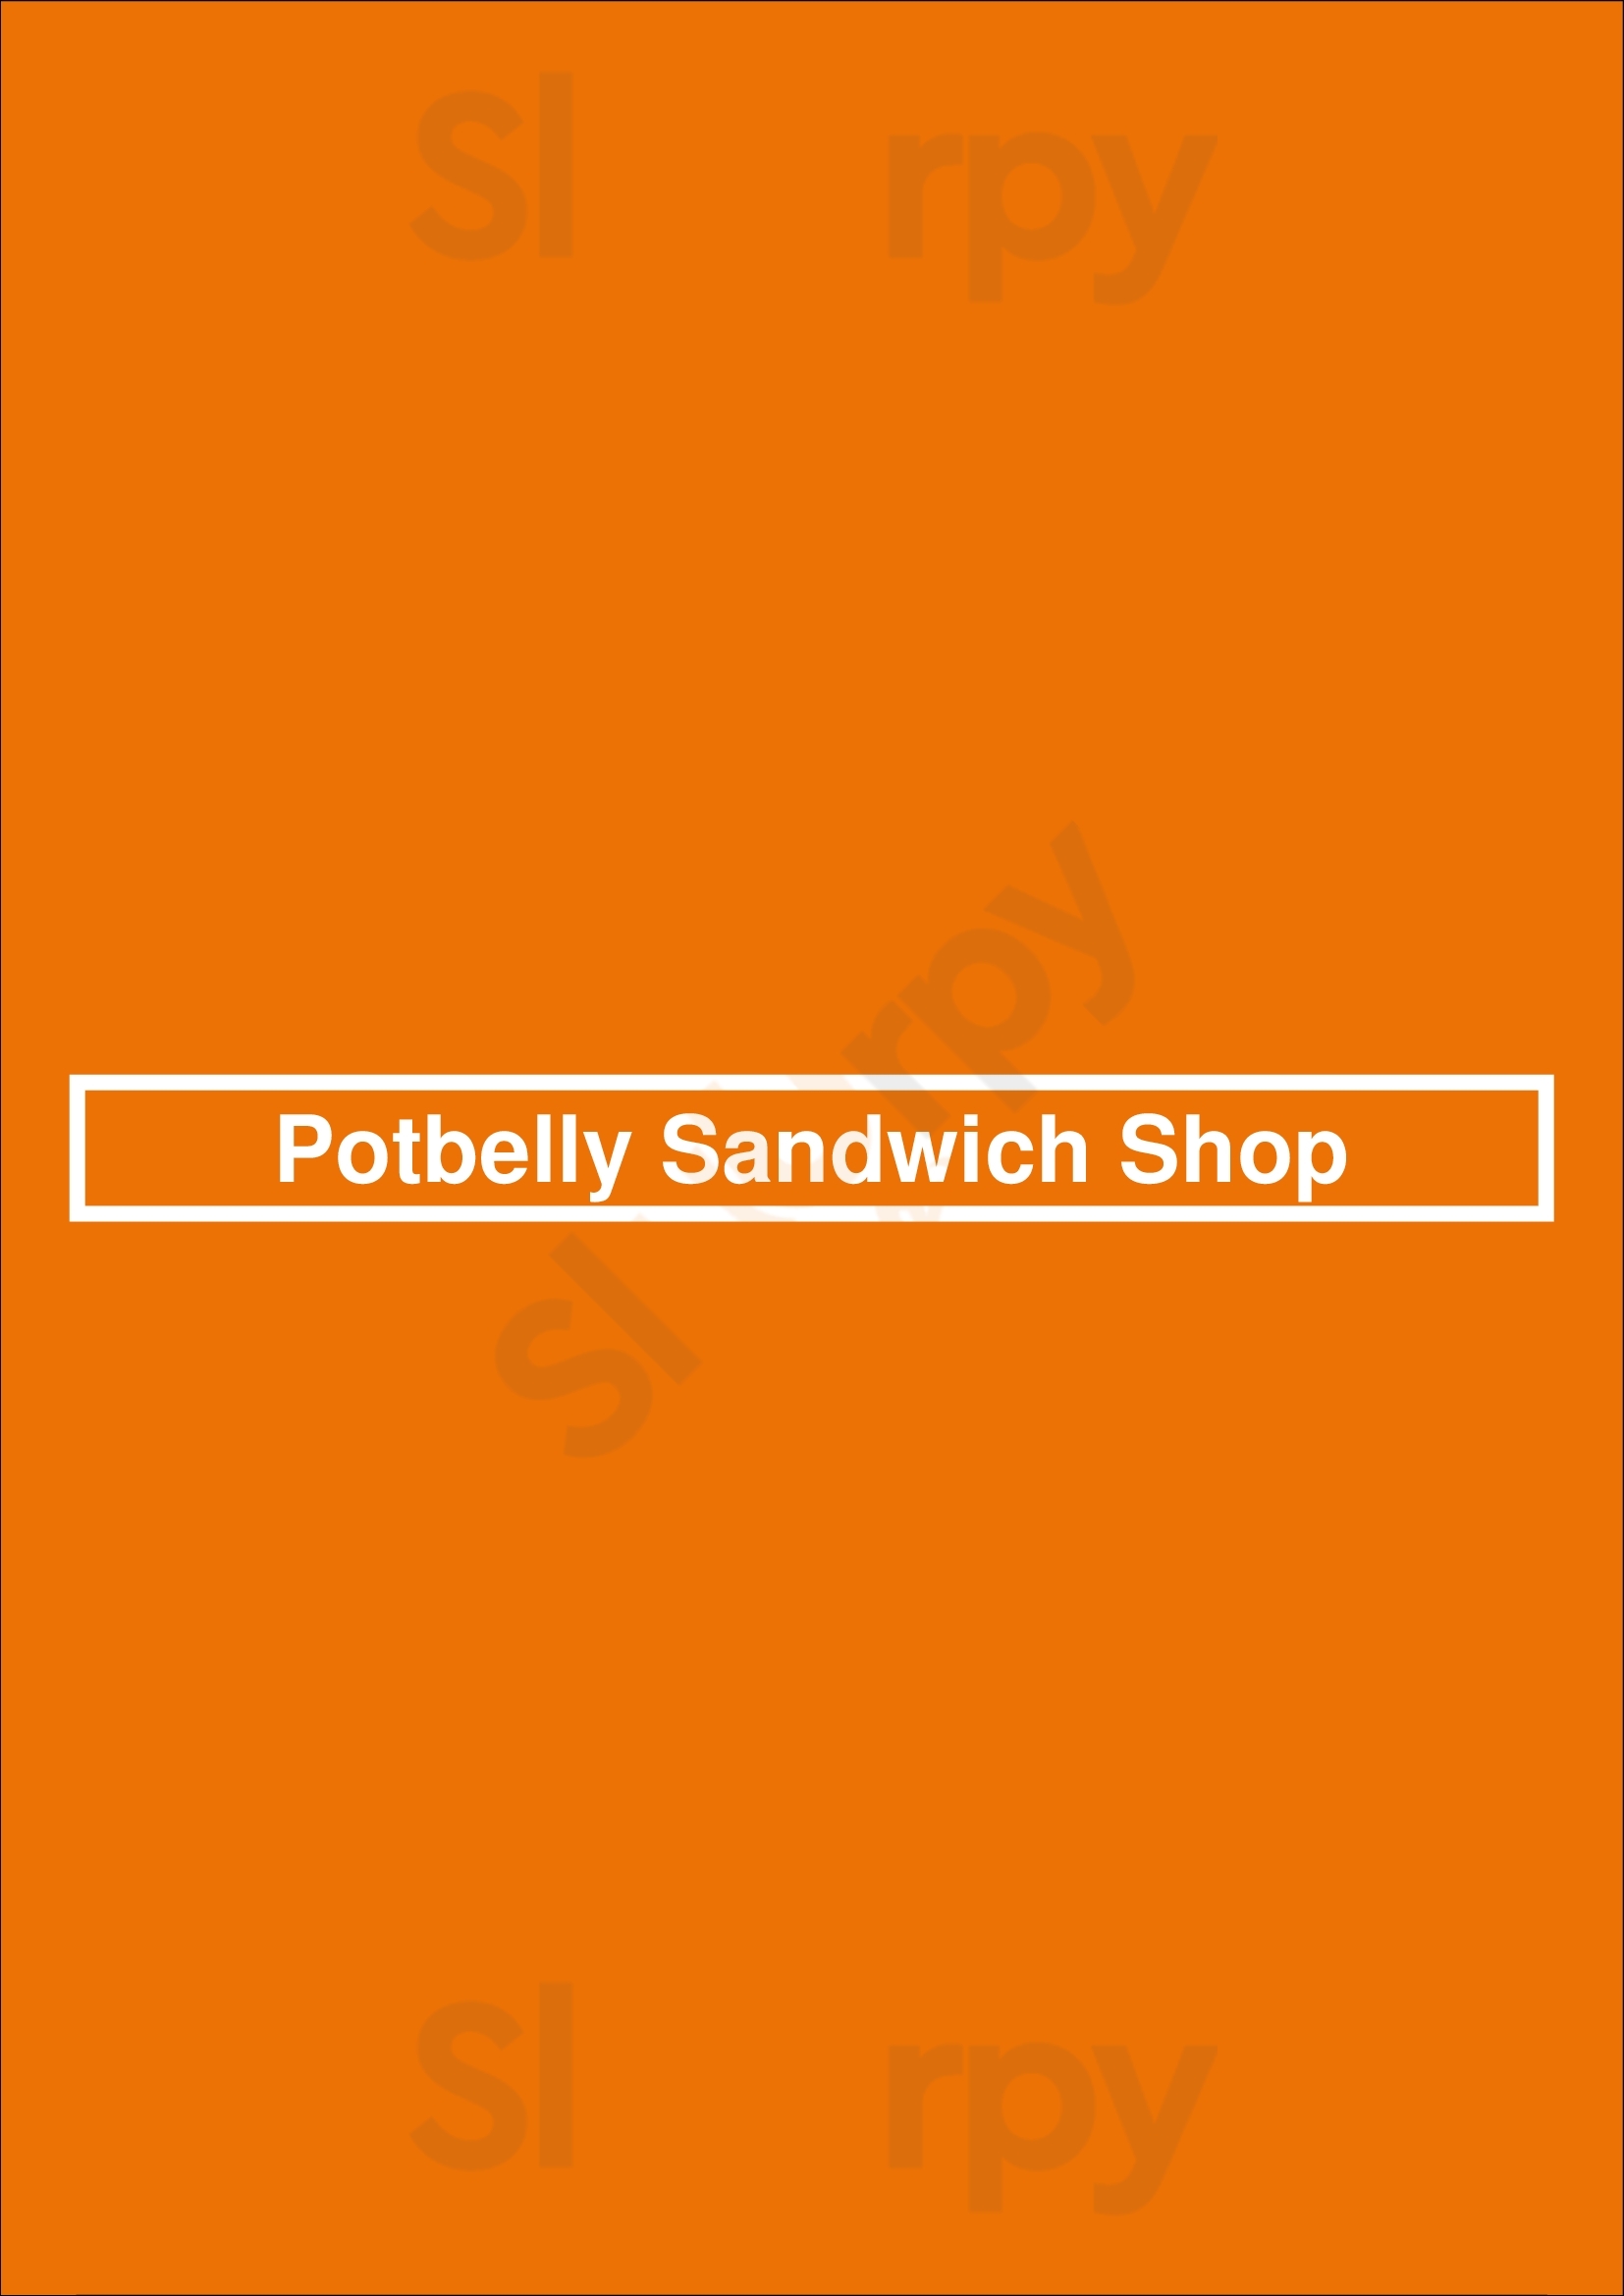 Potbelly Sandwich Shop Denver Menu - 1